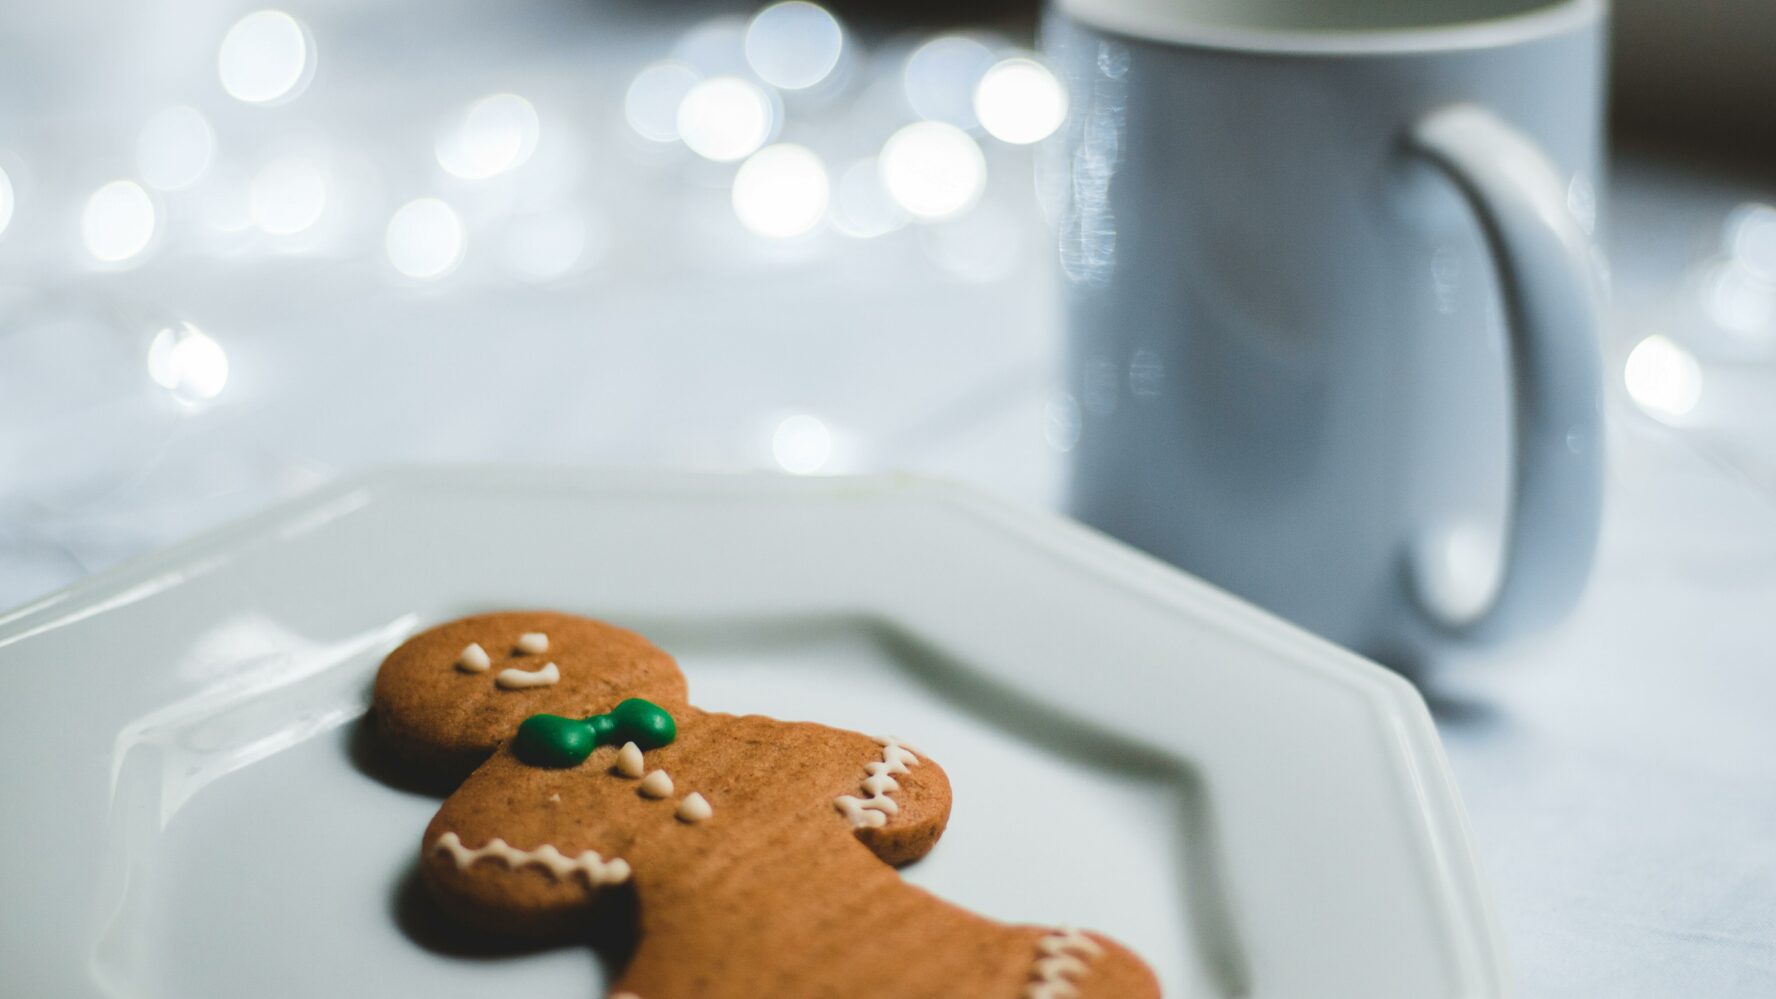 A festive gingerbread man on a plate next to a mug.